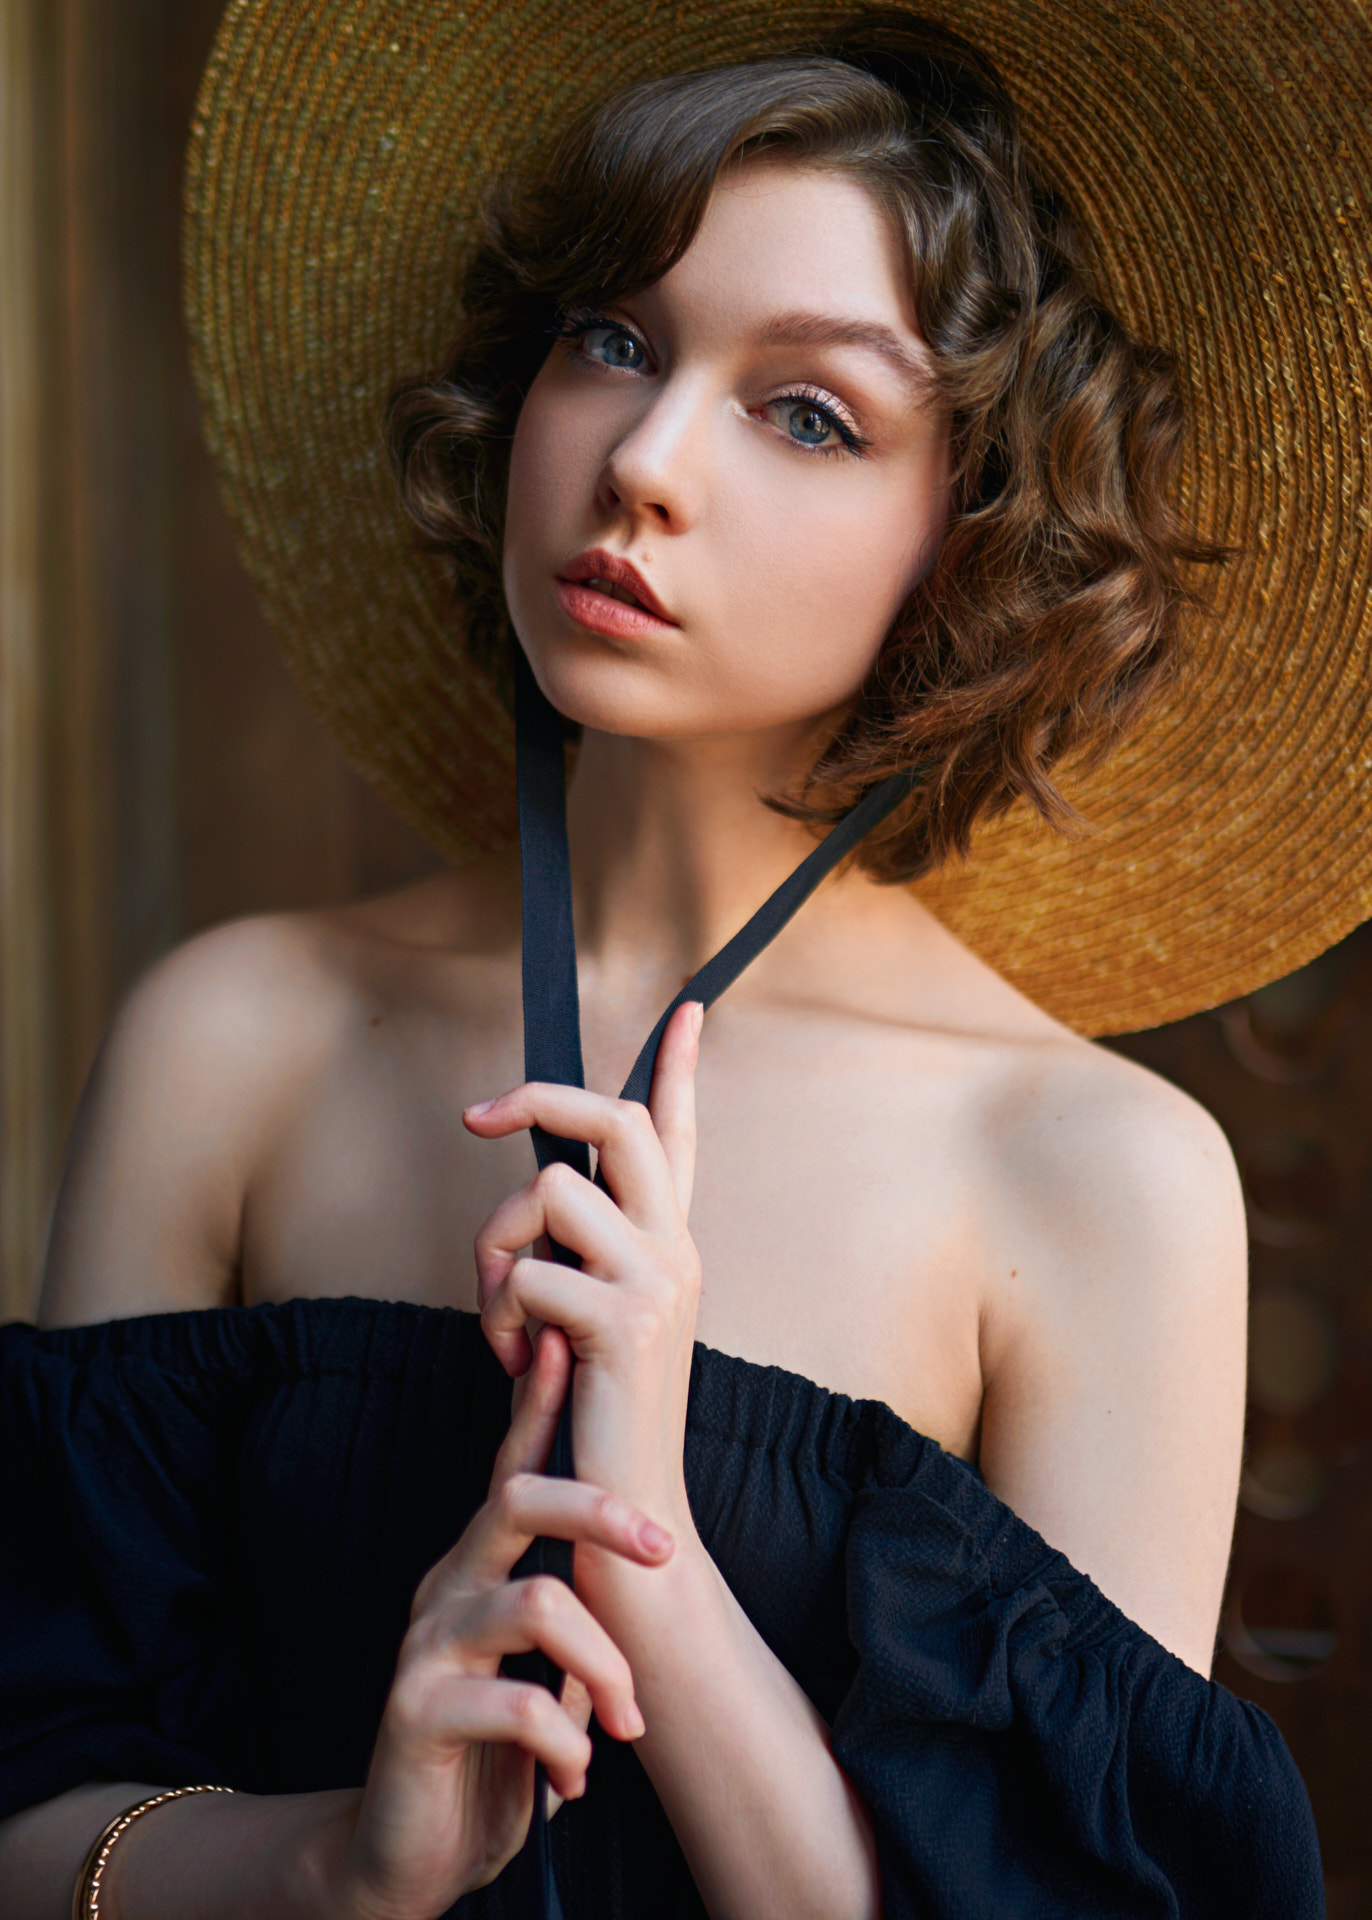 Sergey Fat Women Olya Pushkina Brunette Short Hair Wavy Hair Makeup Eyeliner Hat Straw Hat Looking A 1372x1920